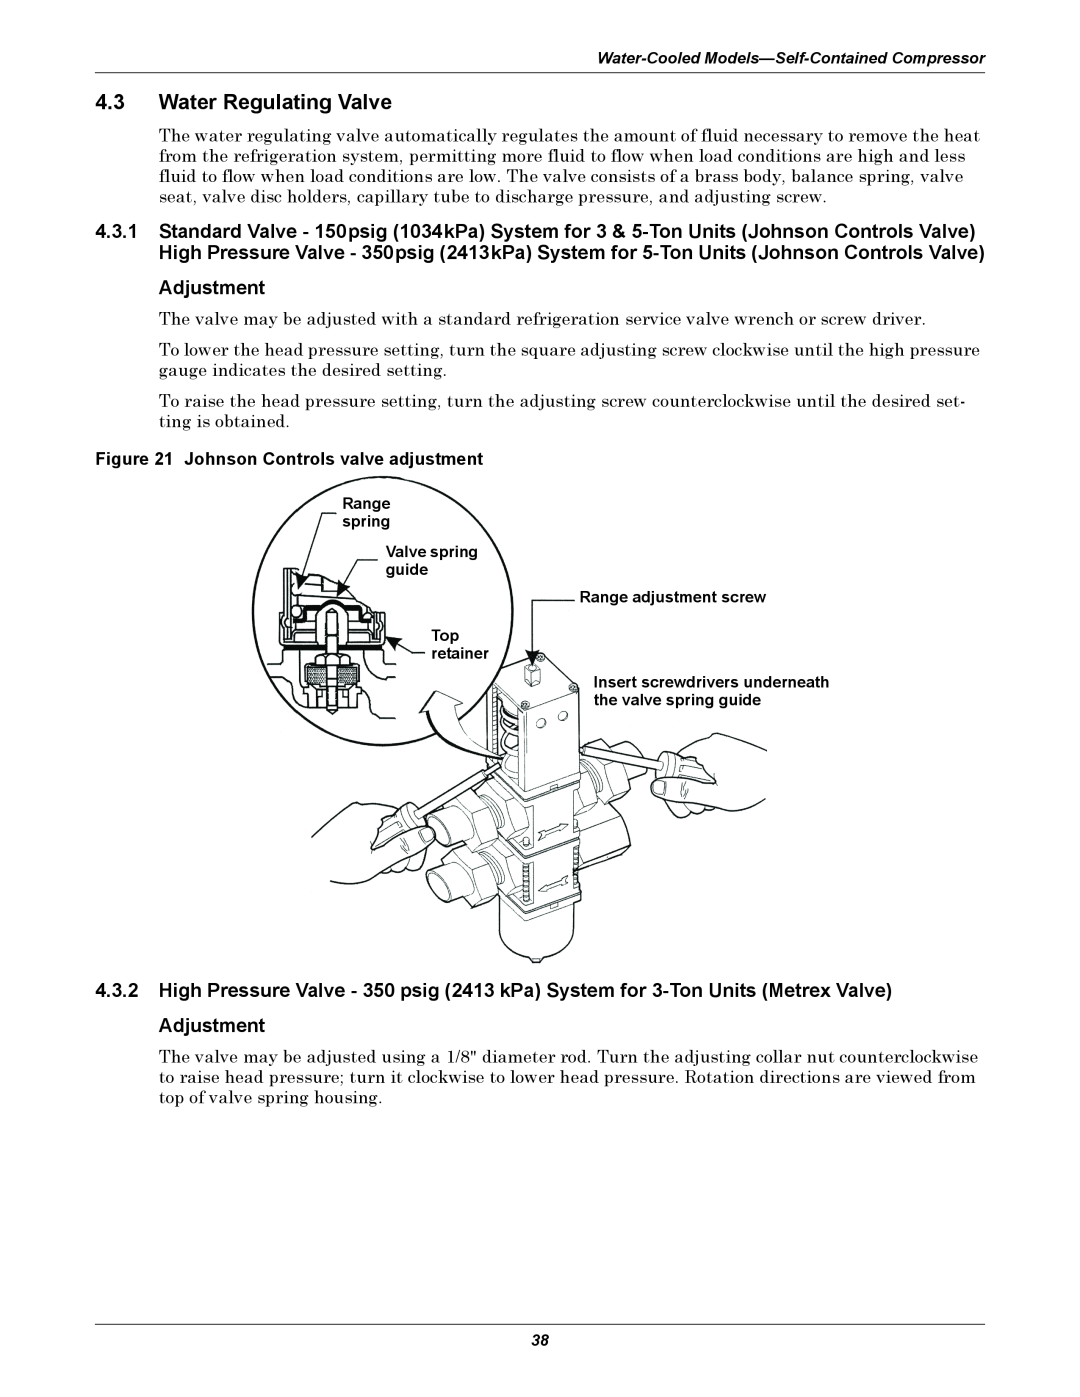 Emerson 3000 installation manual 4.3Water Regulating Valve, Adjustment, Johnson Controls valve adjustment 